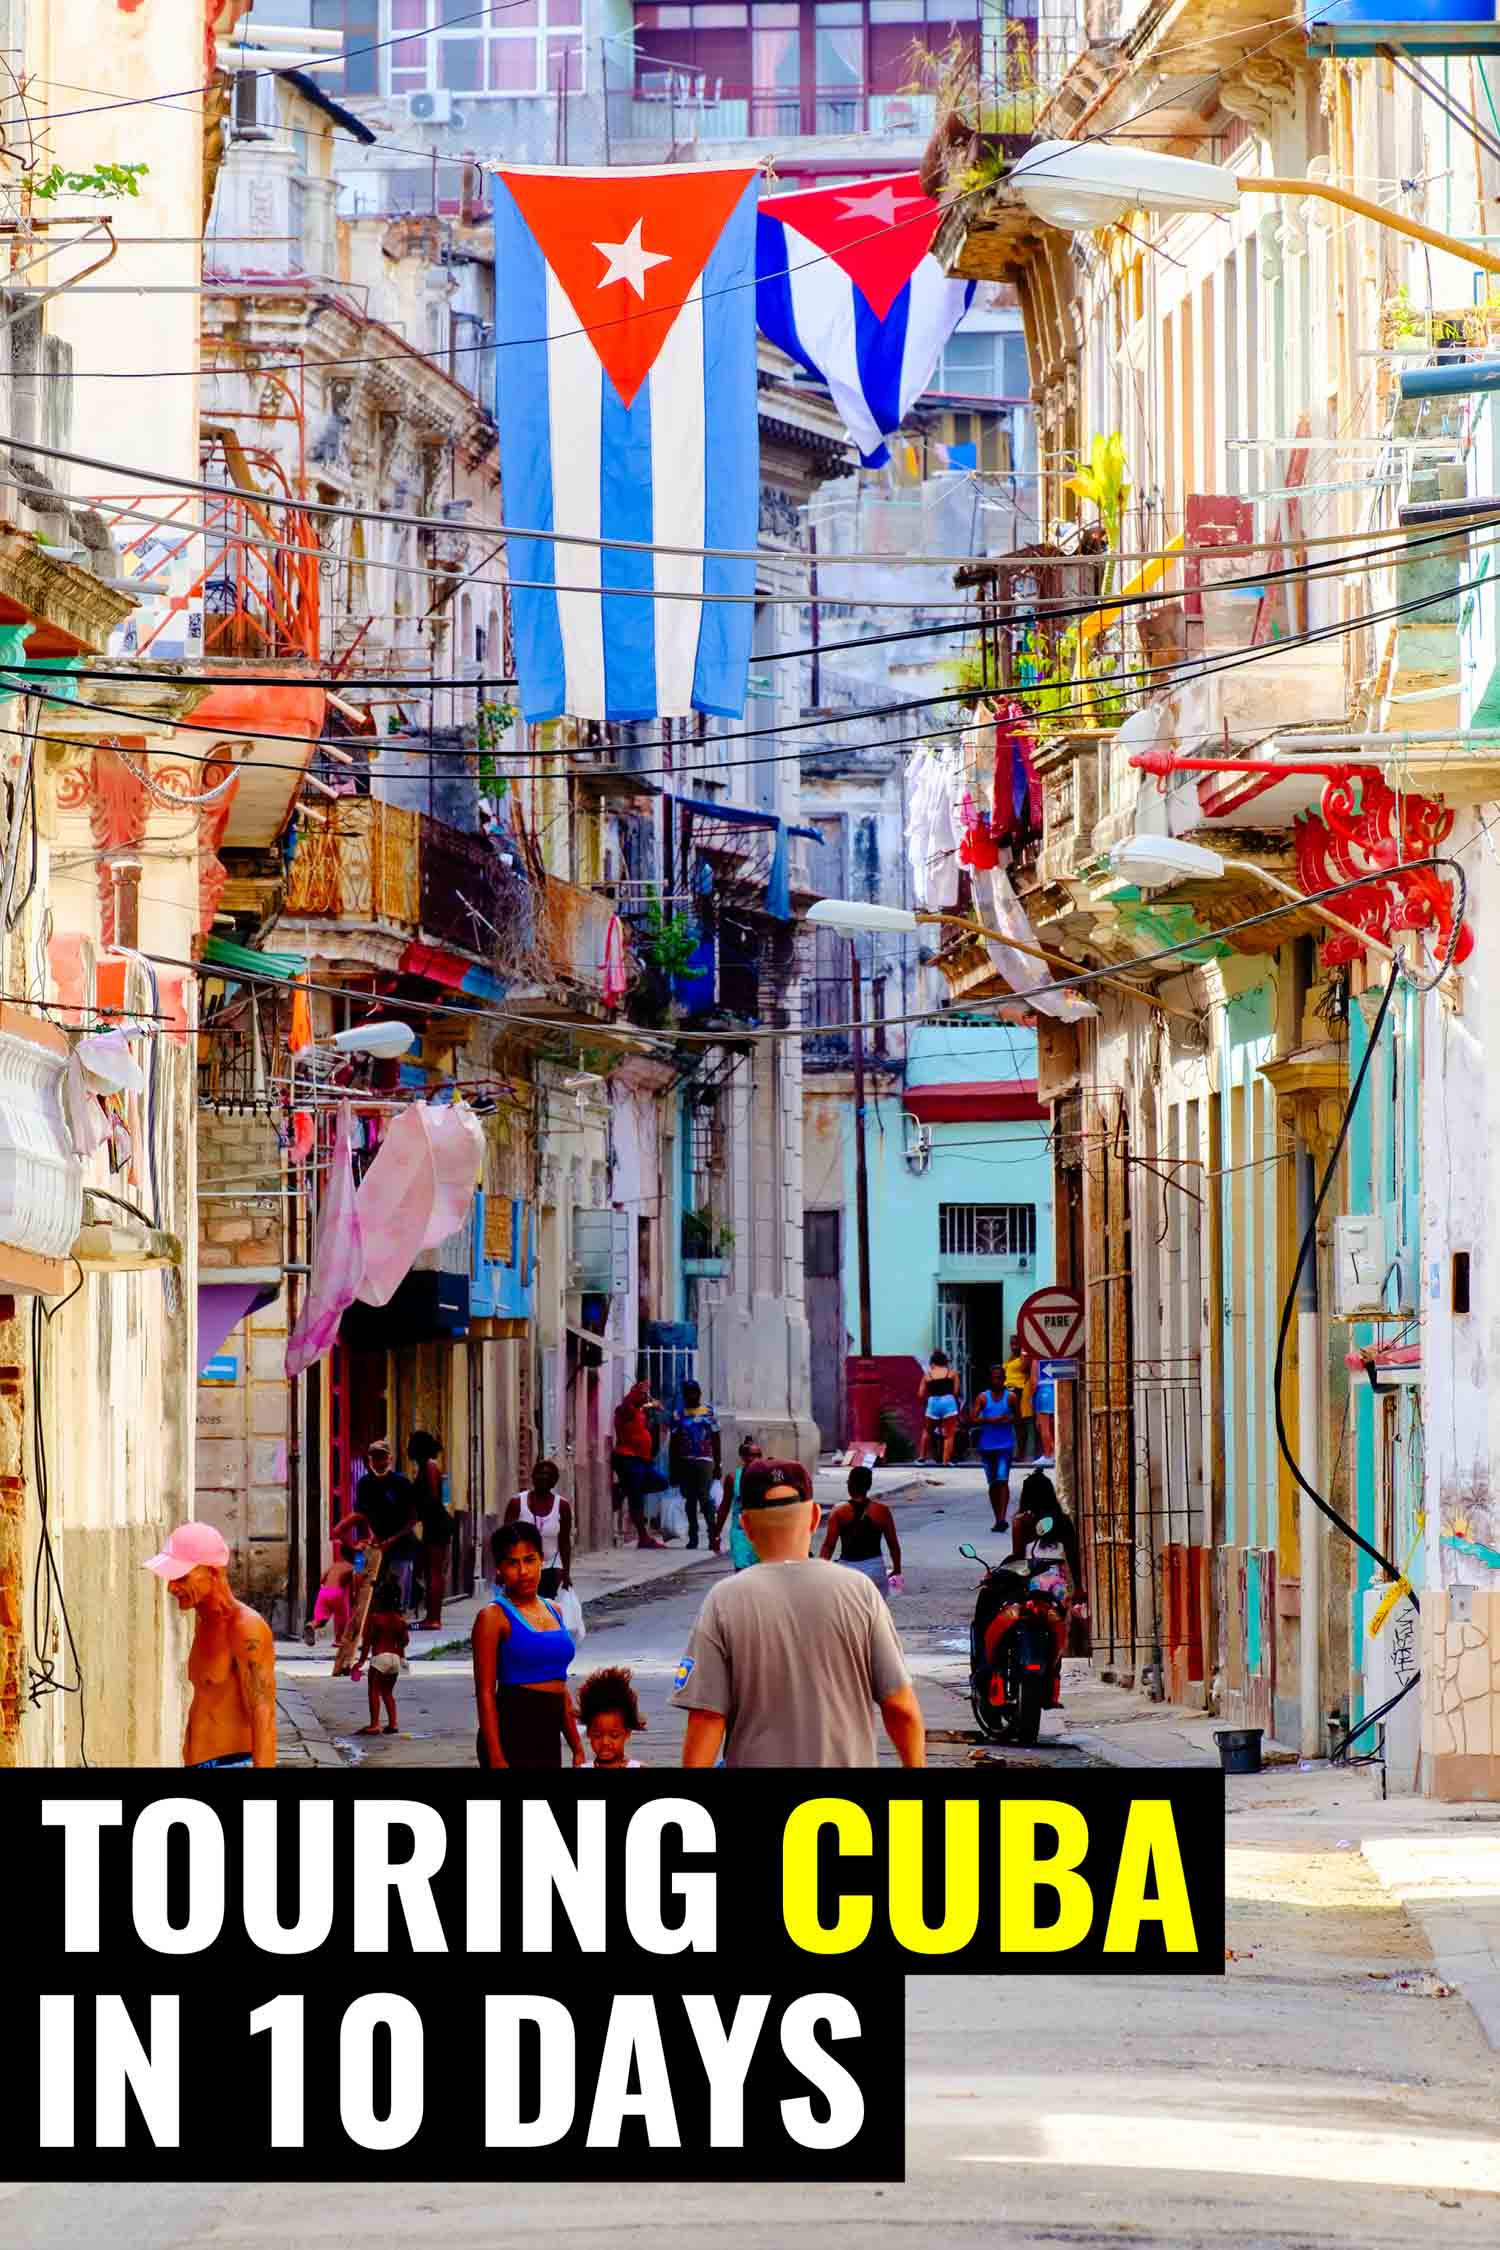 Central Havana streets